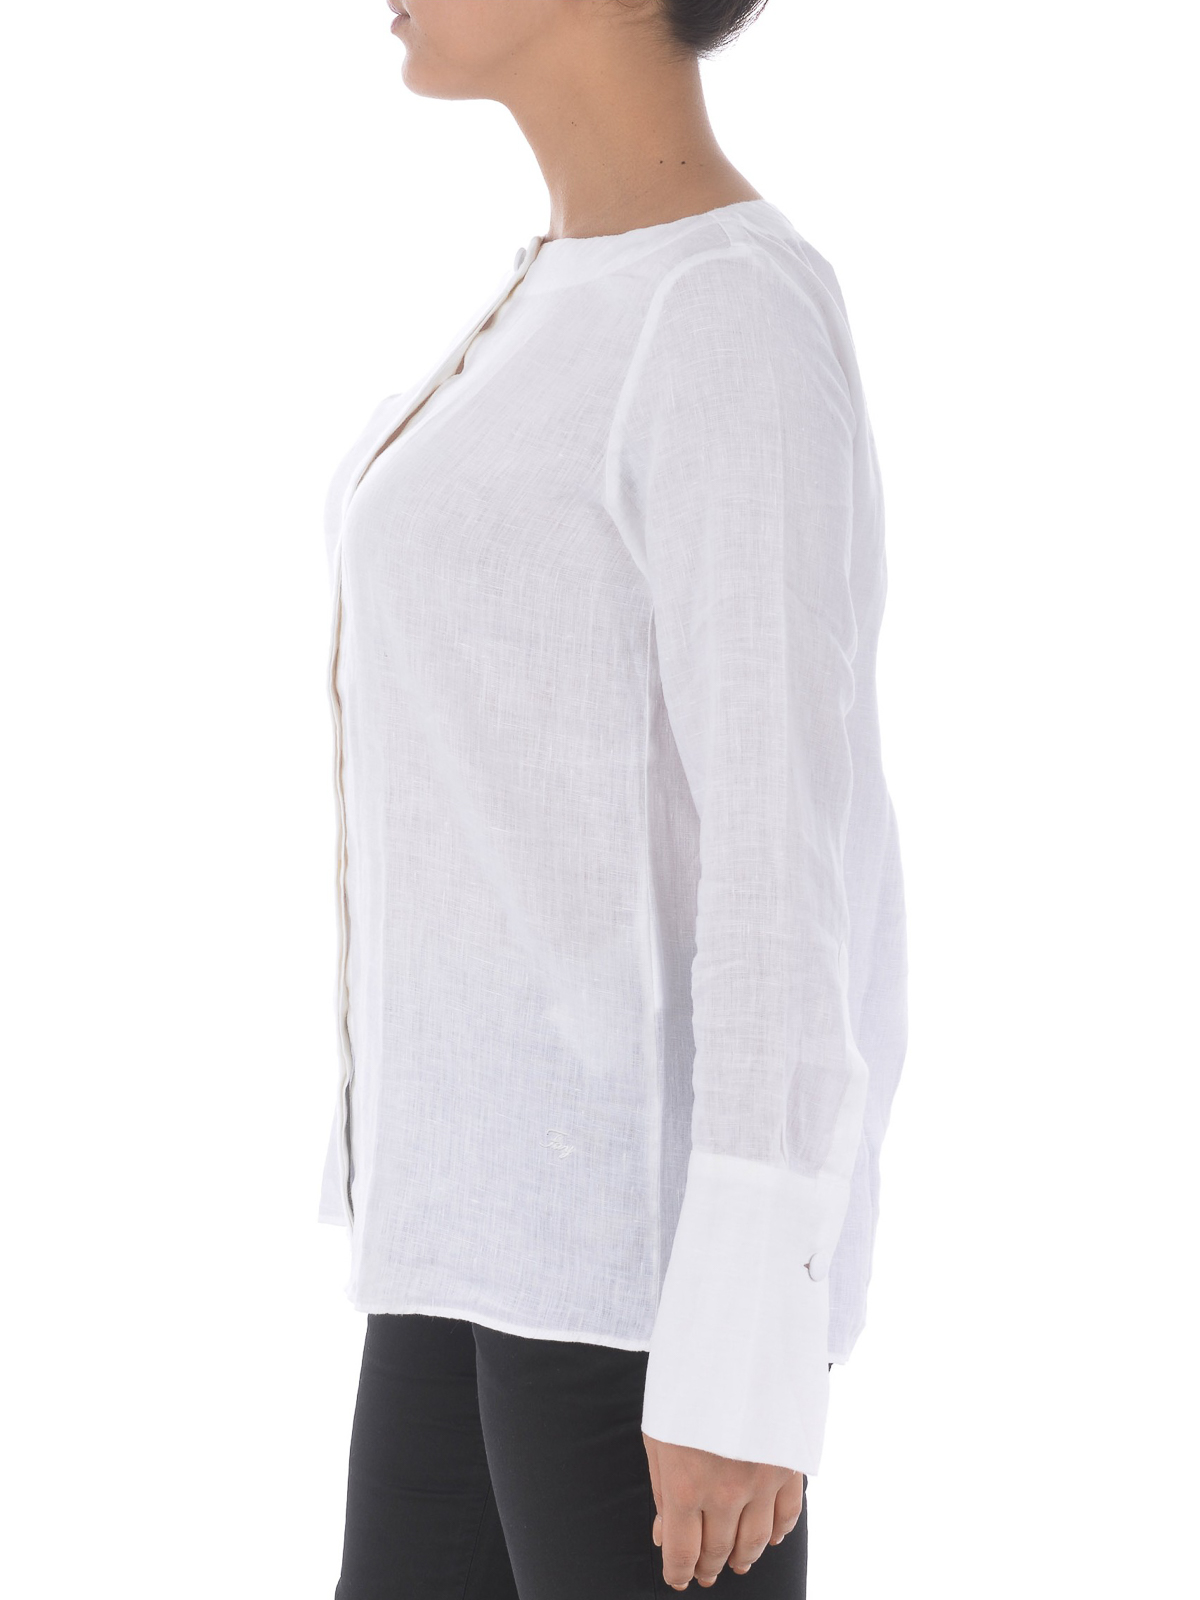 Shirts Fay - Boat neck white pure linen shirt - NCWA138A05LQTCB001